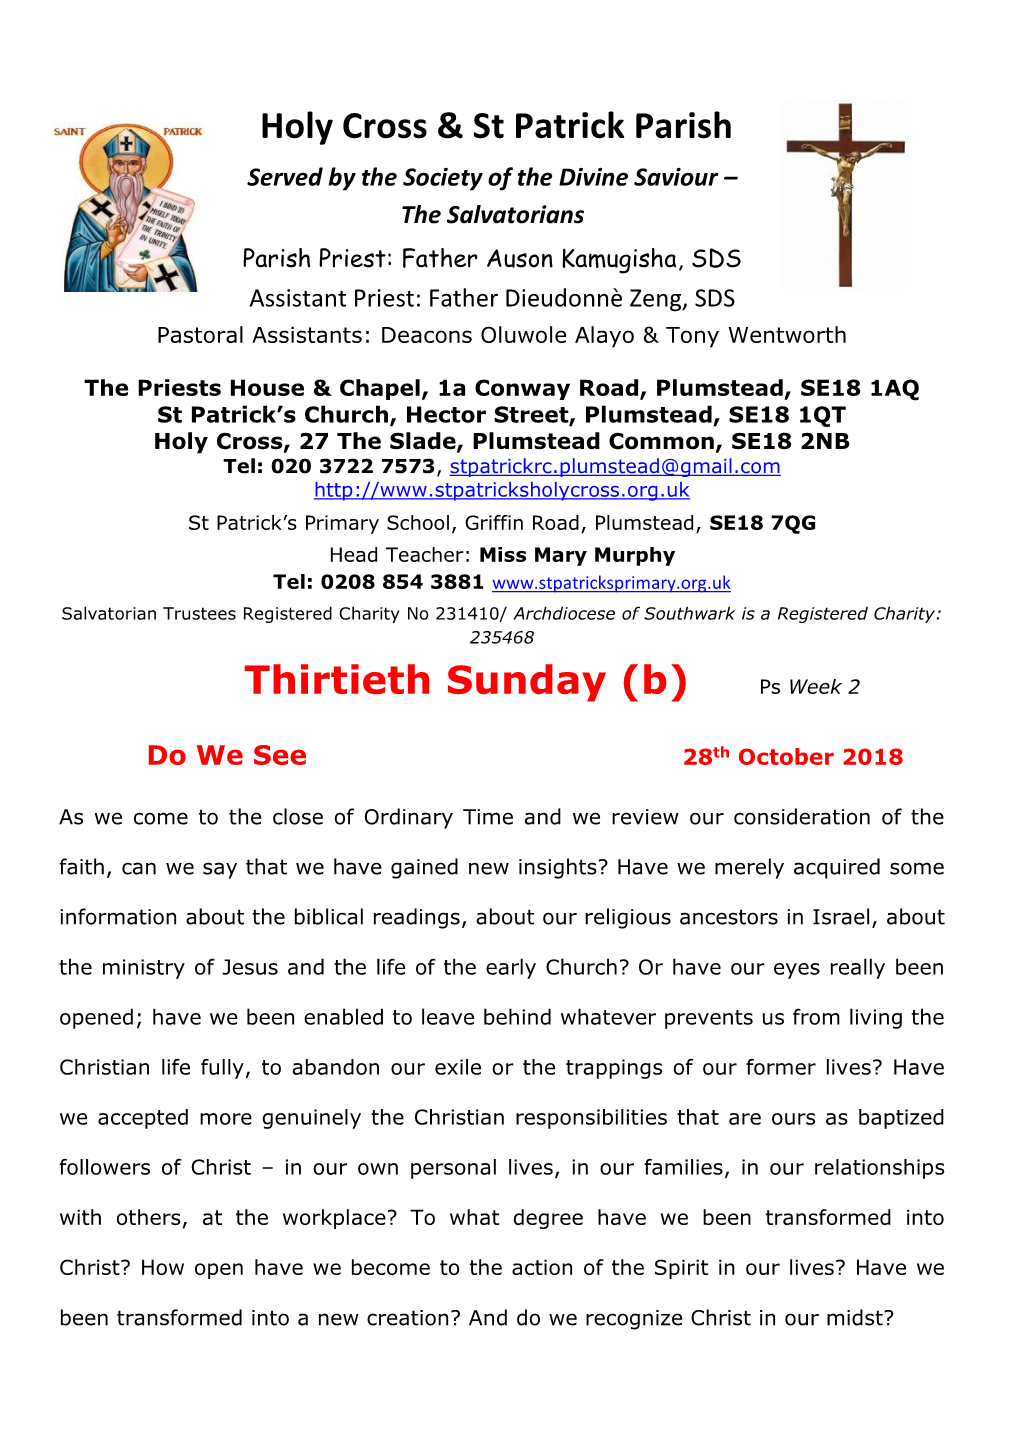 Holy Cross & St Patrick Parish Thirtieth Sunday